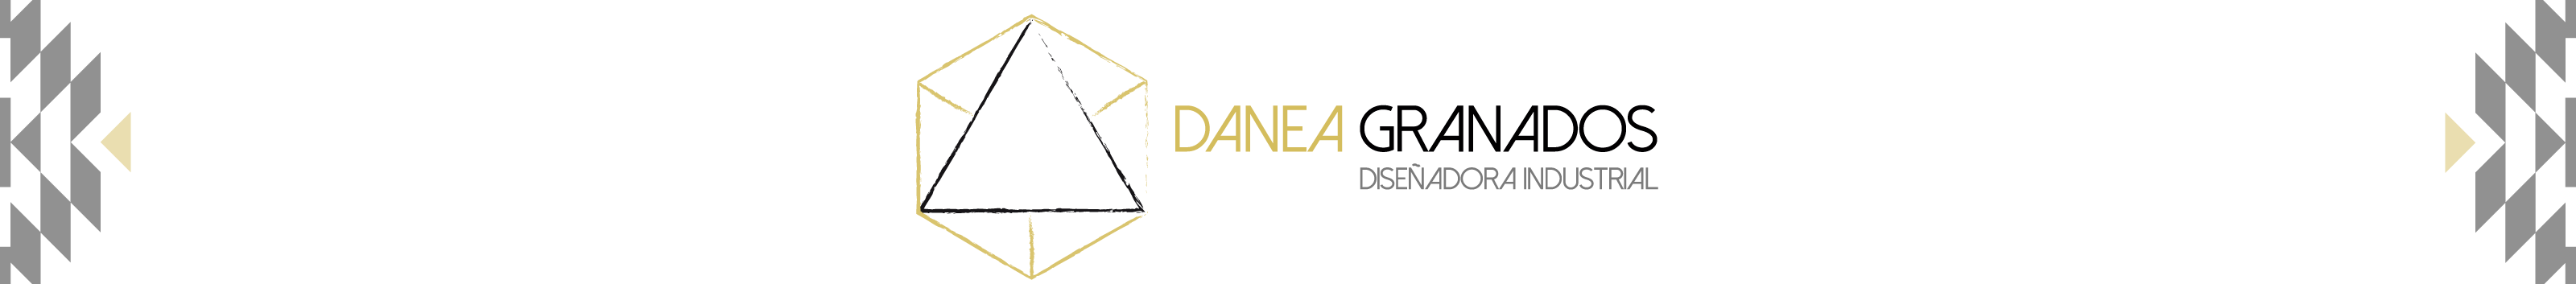 Banner del profilo di Circe Danea Granados Briones